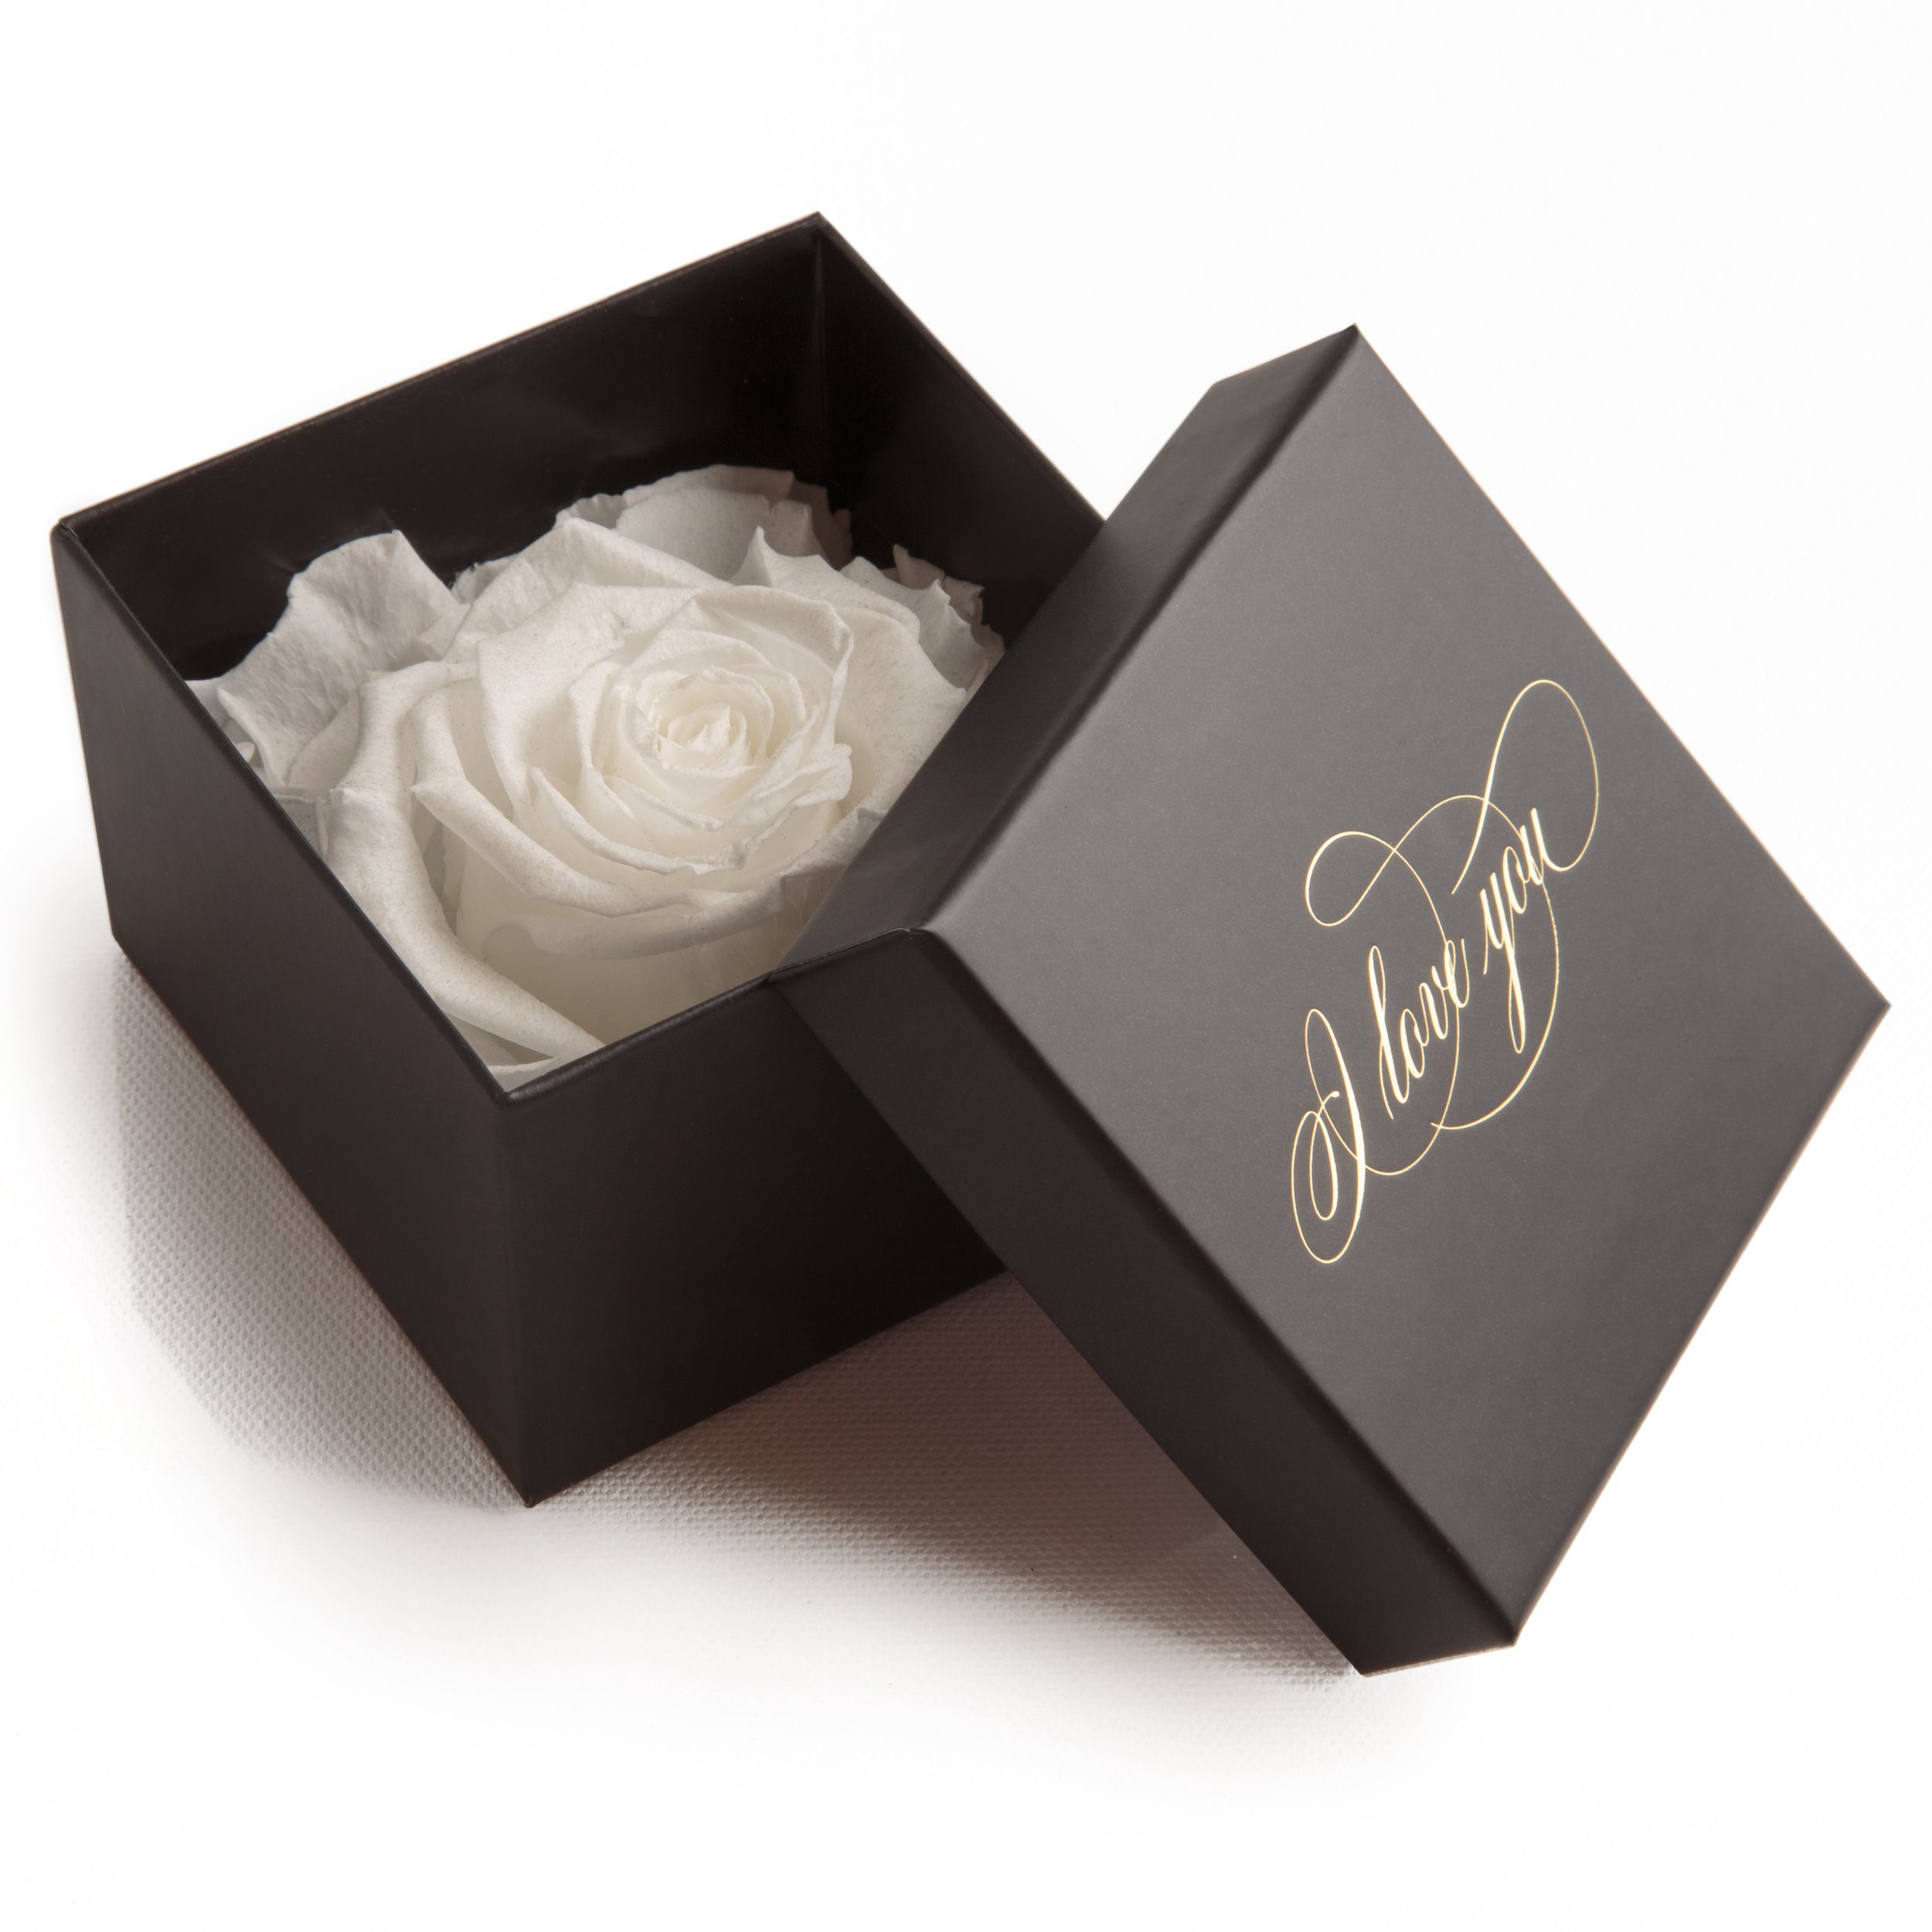 Kunstblume Infinity Rose Box I Love You Geschenk Idee Liebesbeweis Rose, ROSEMARIE SCHULZ Heidelberg, Höhe 6 cm, Echte Rose konserviert Weiß